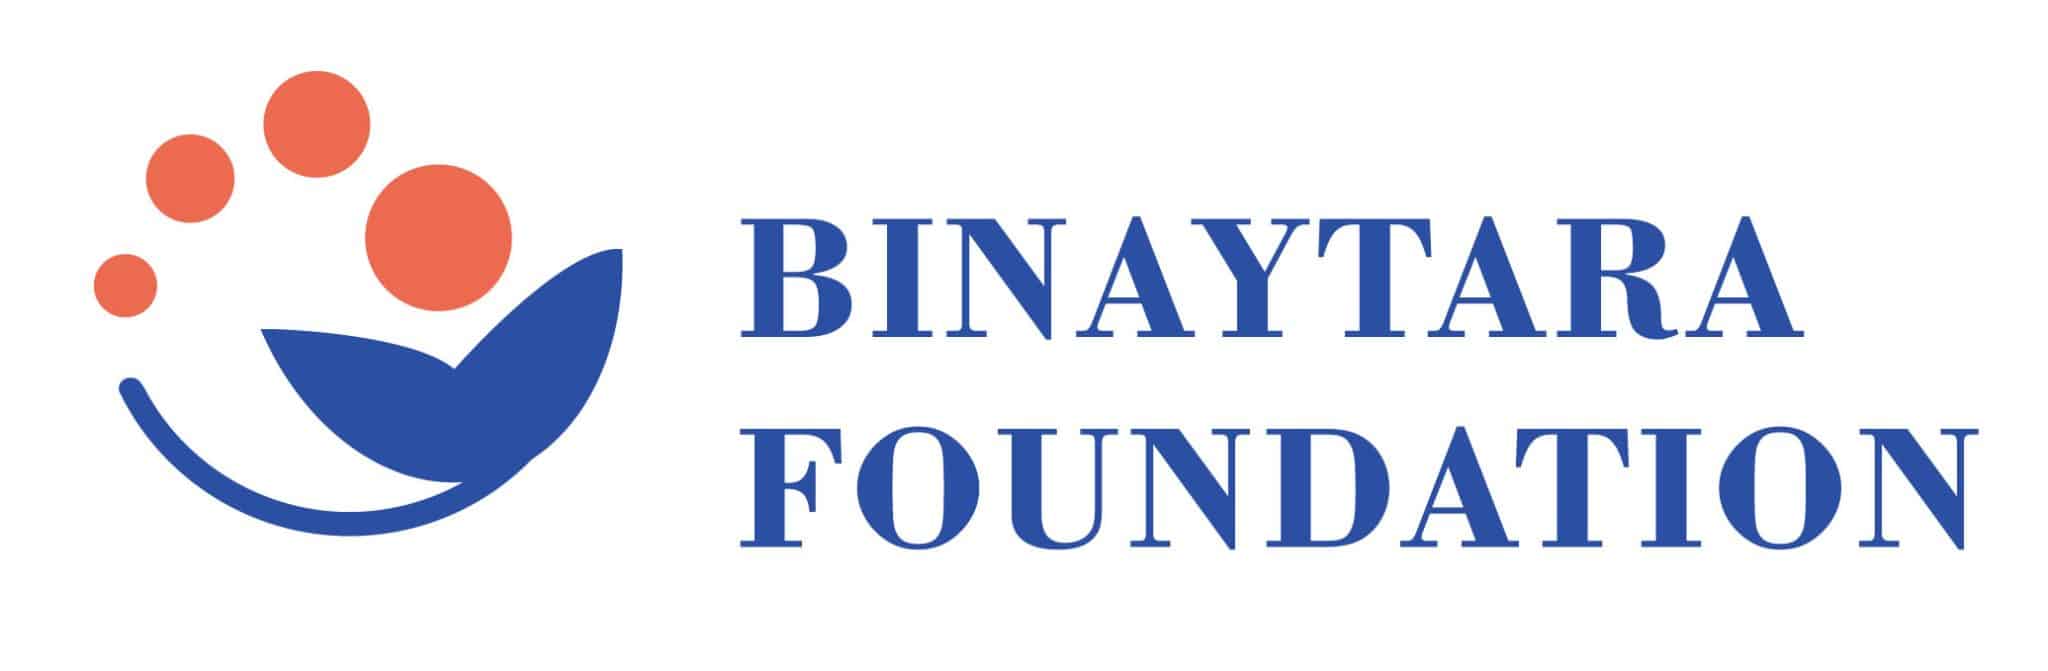 Binaytara Foundation Logo